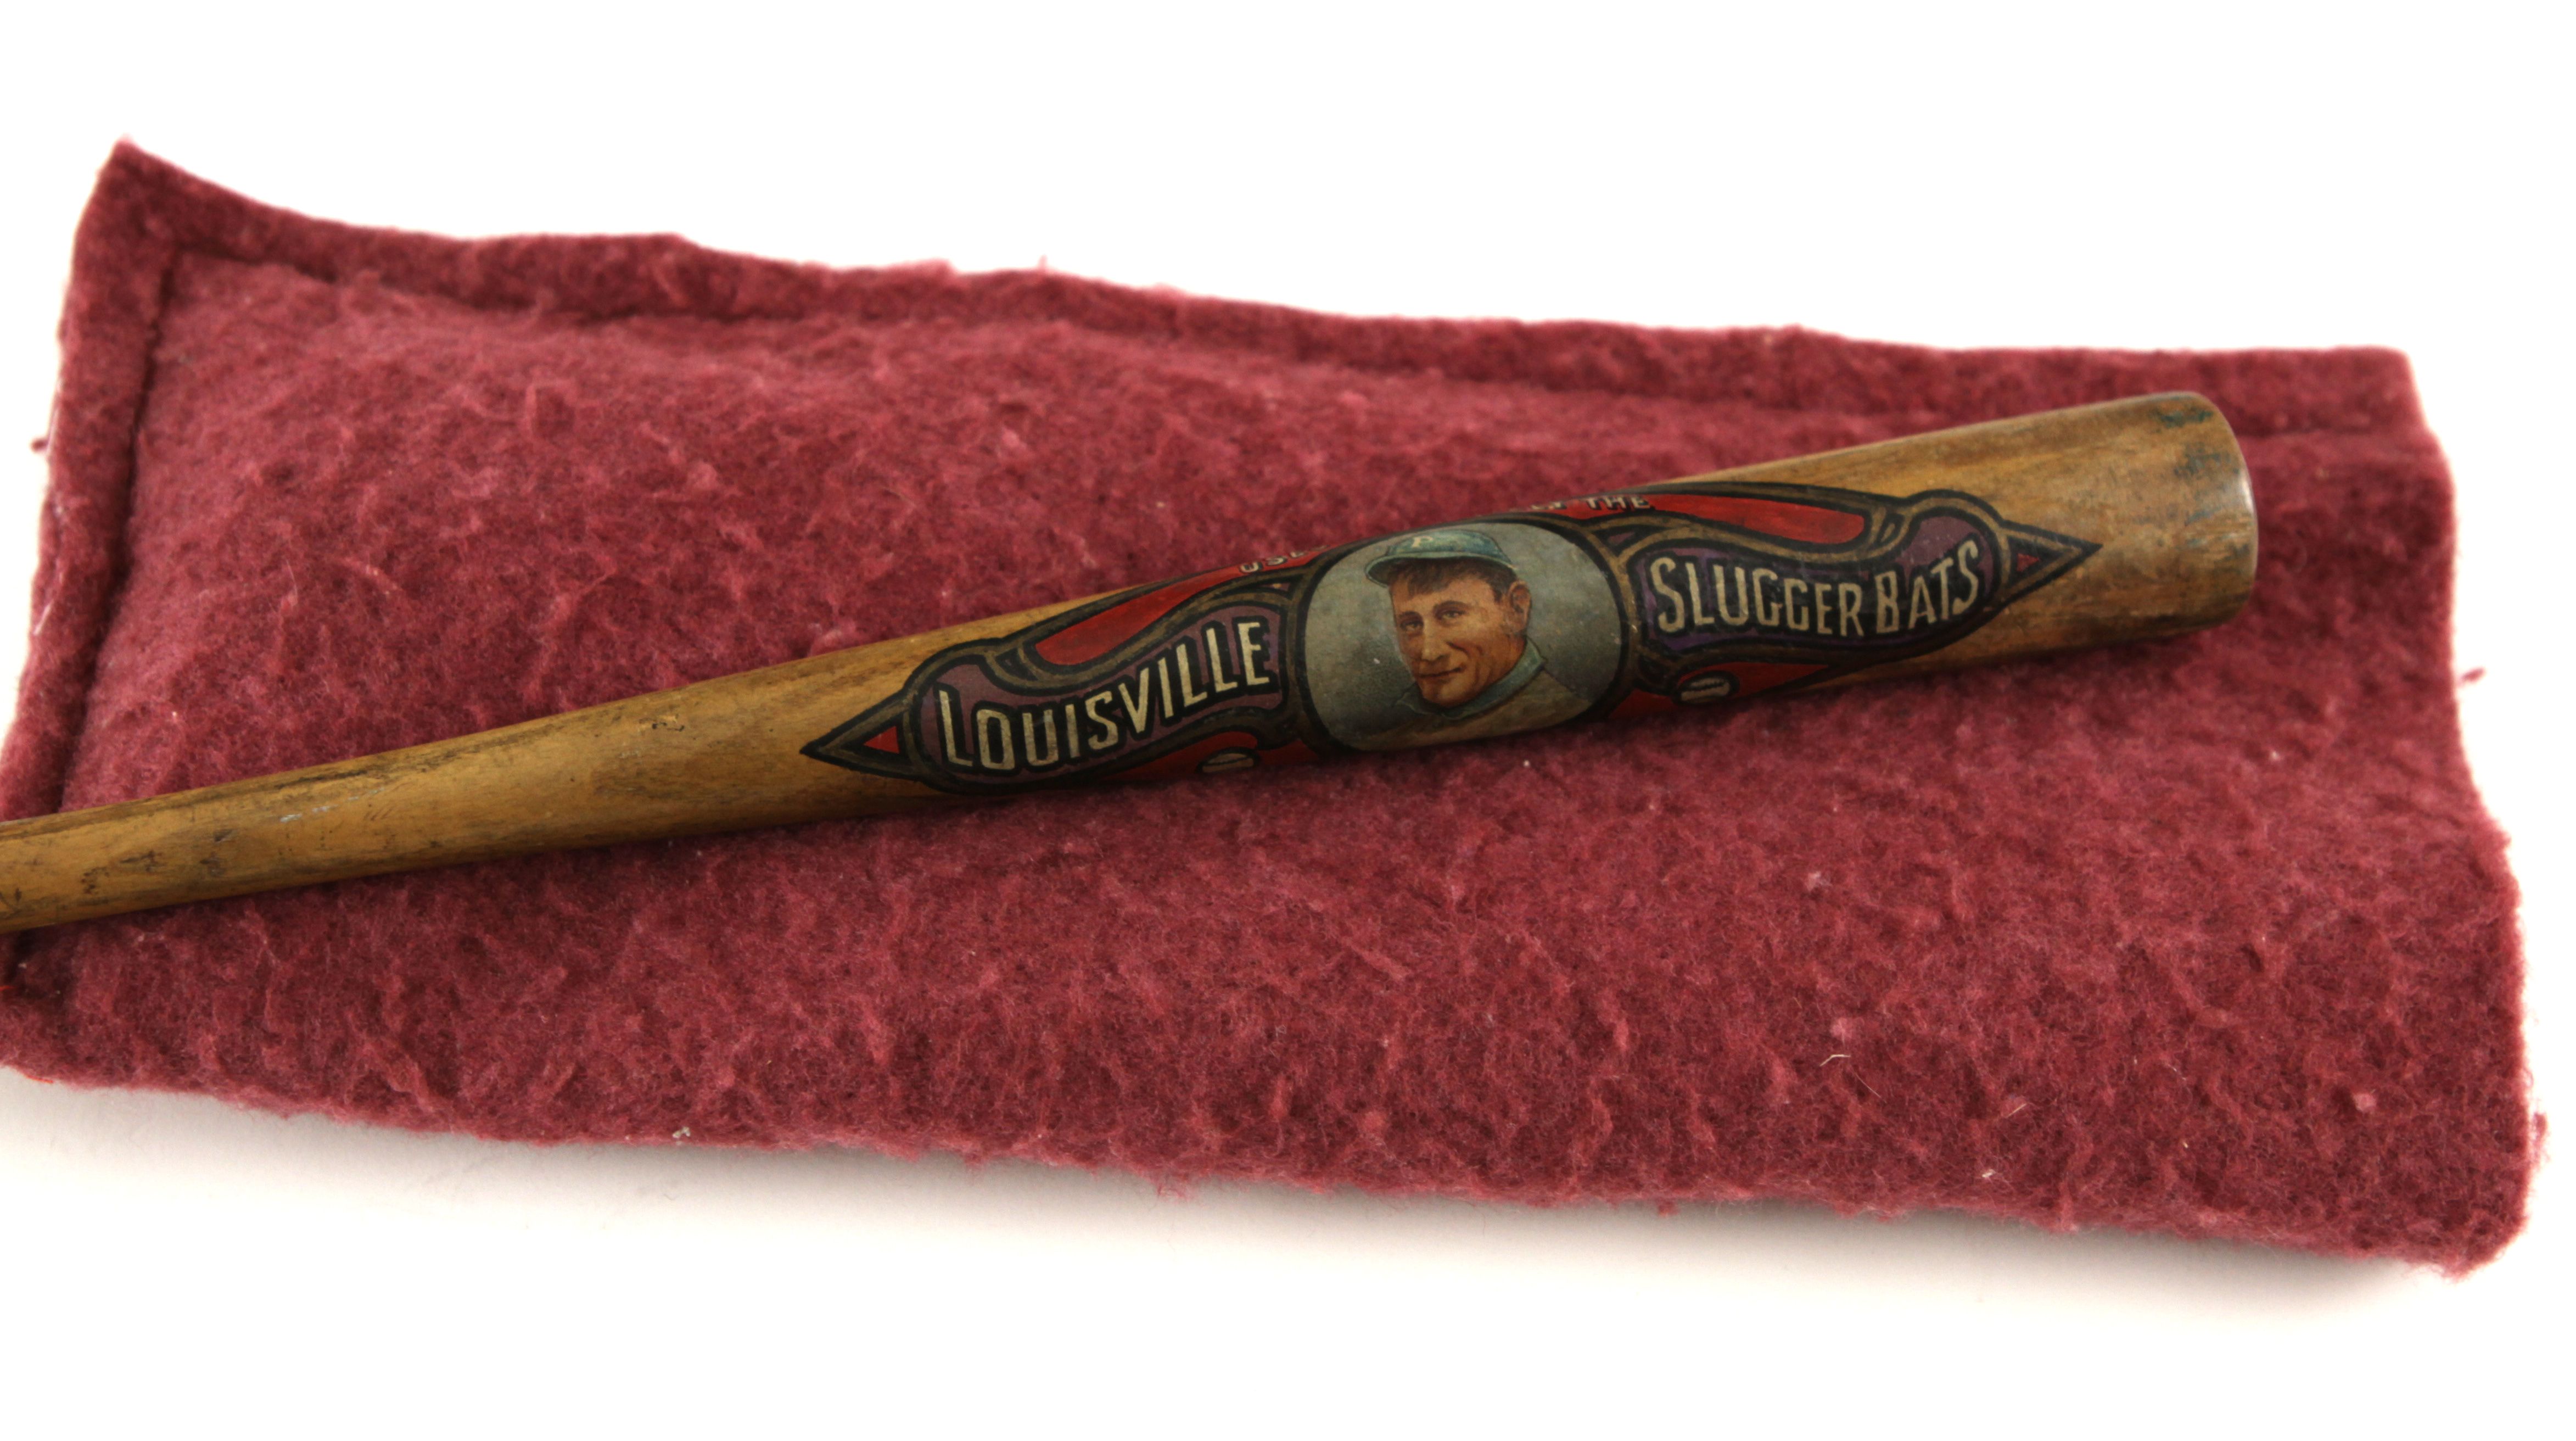 1910's Honus Wagner Louisville Slugger Mini Bat